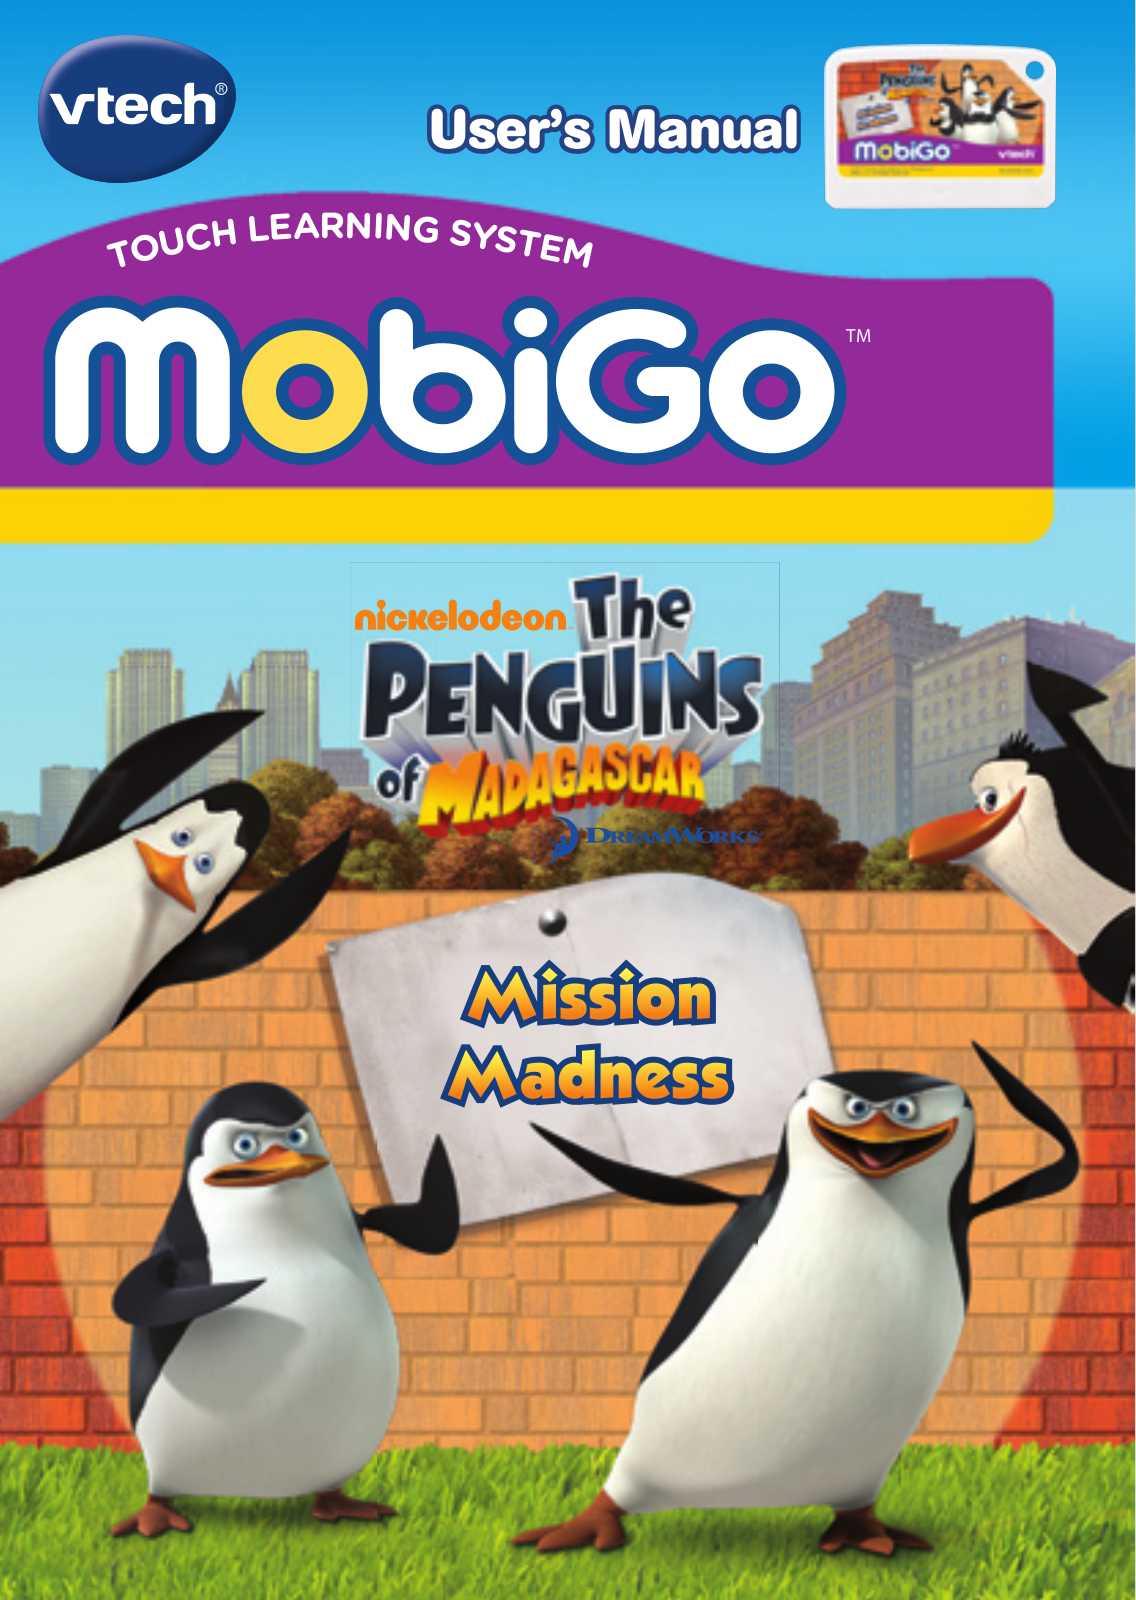 VTech MobiGo Cartridge - Penguins of Madagascar Owner's Manual